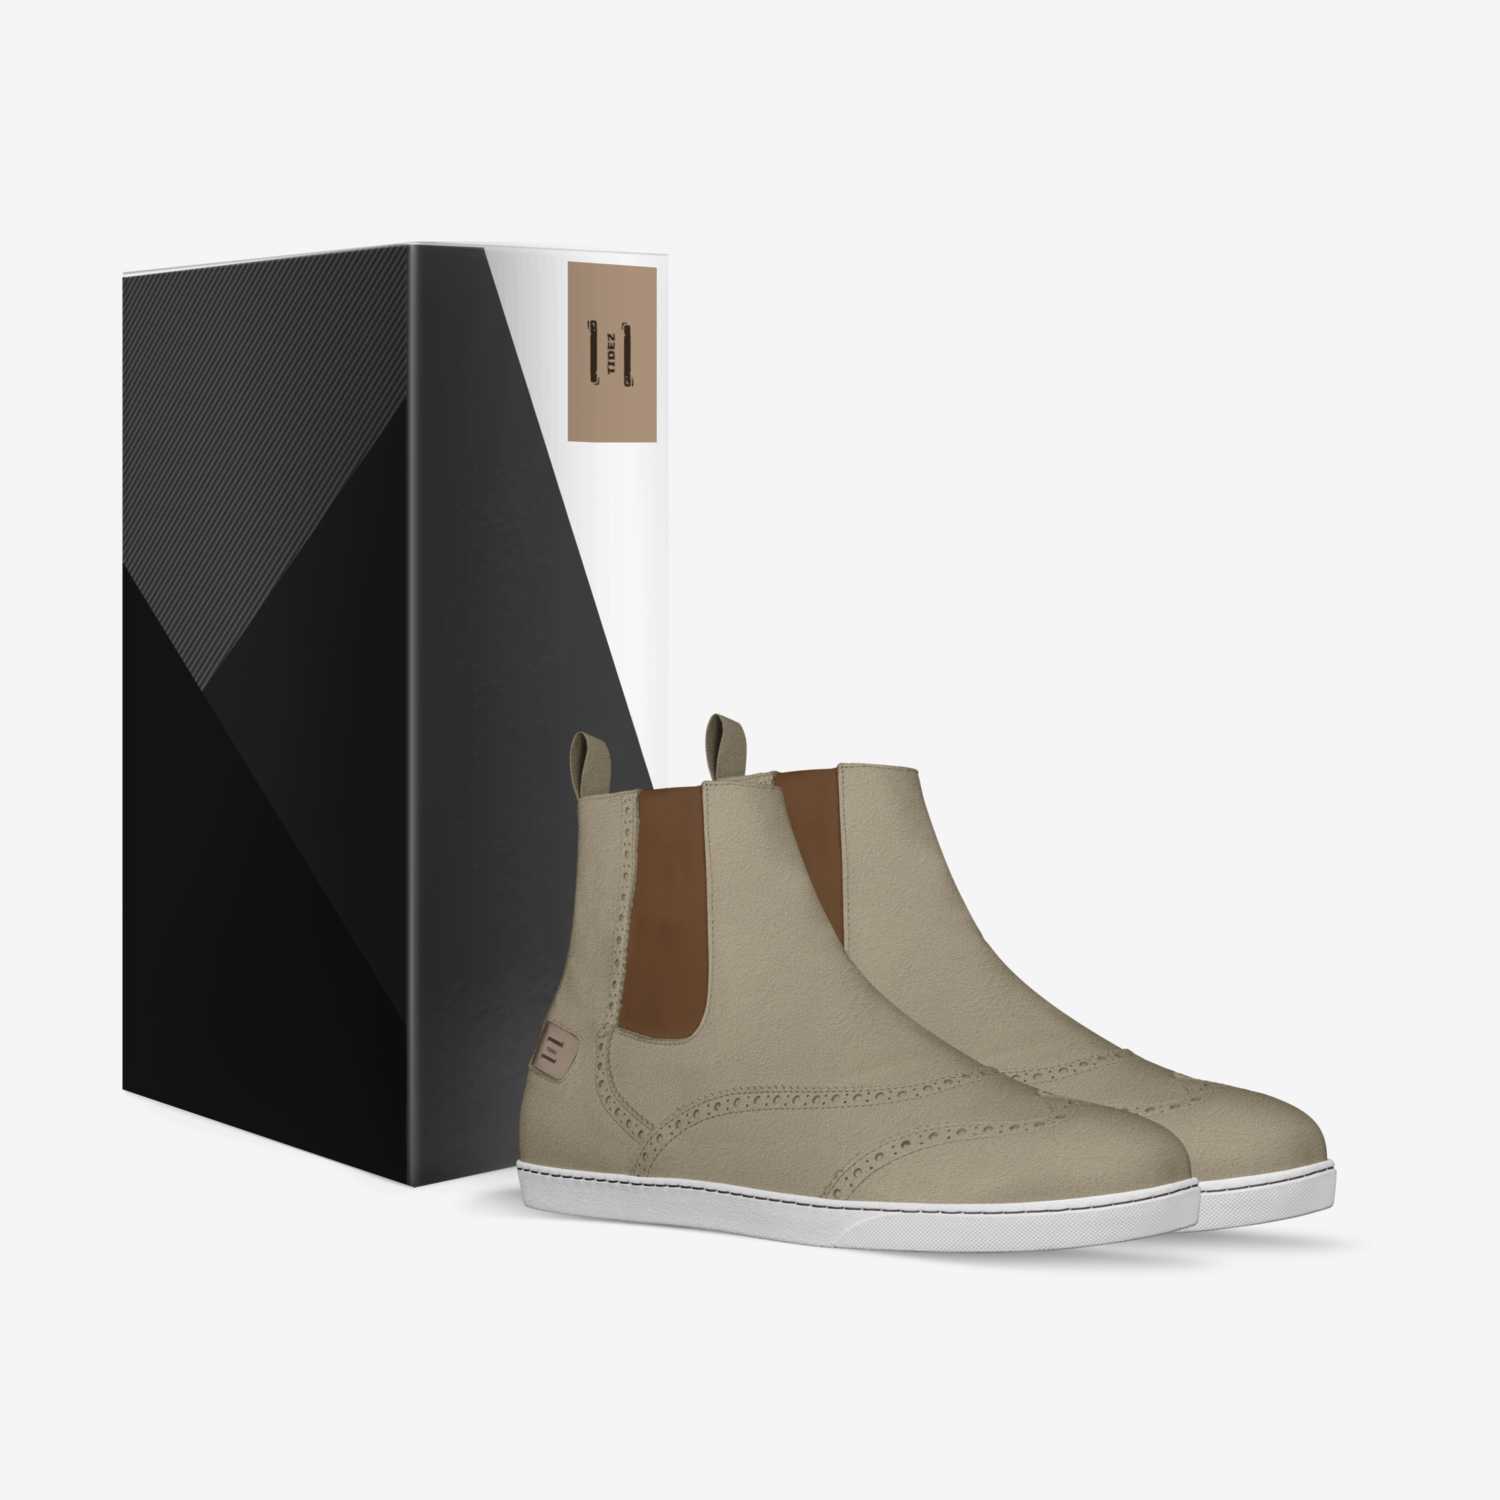 tidez custom made in Italy shoes by Jordan Nichols | Box view